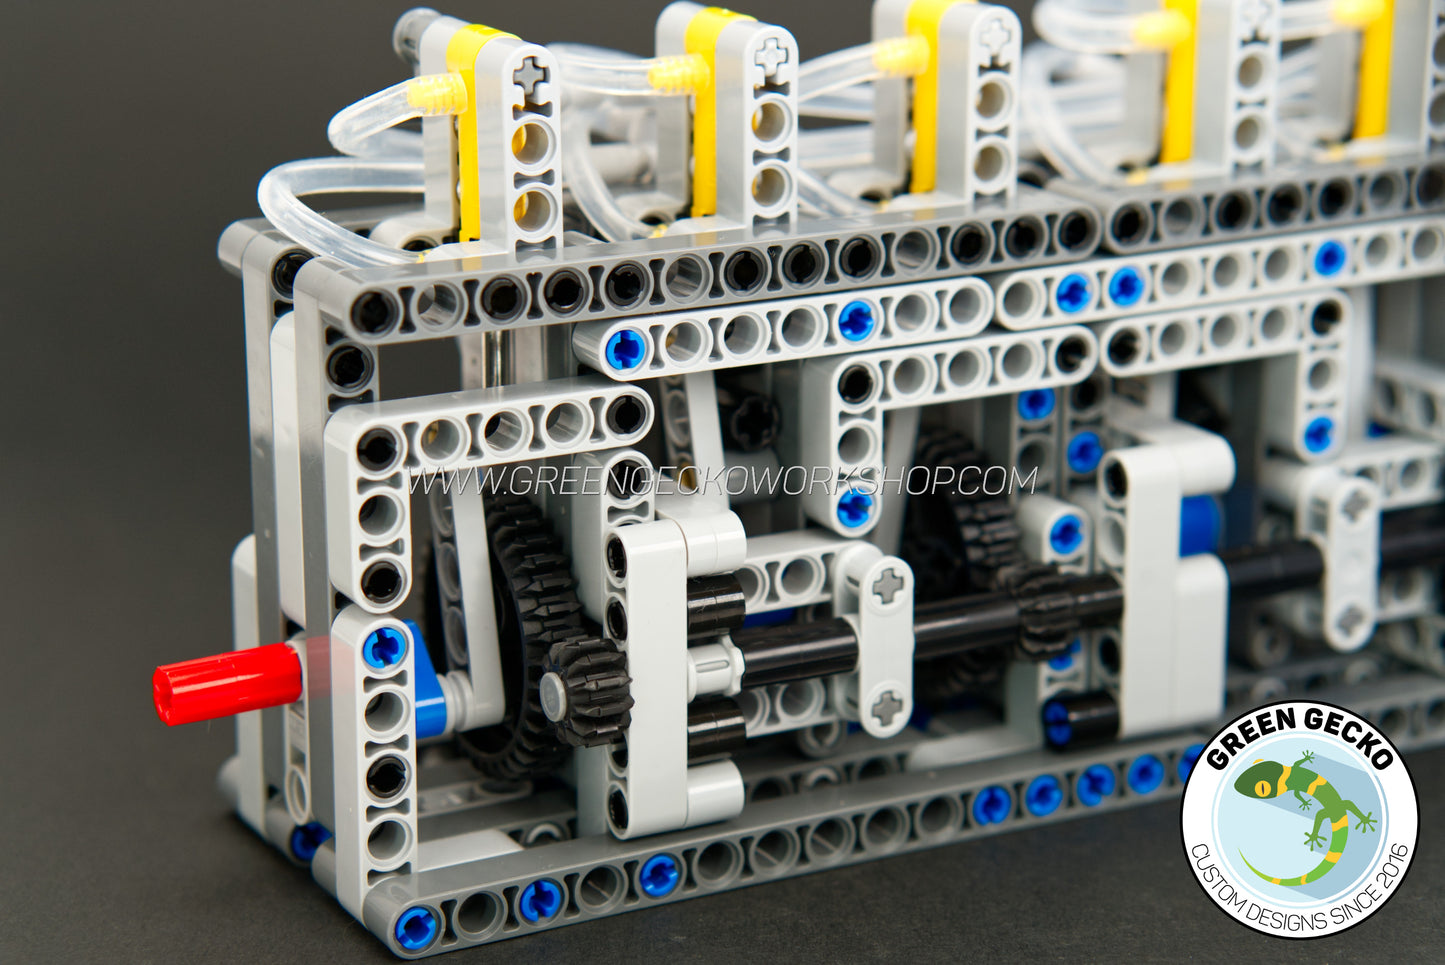 Complete Kit - MK2 6 Cylinder Lego Pneumatic Engine - Inline 6 - 2000RPM + FREE 5 Speed Gearbox!